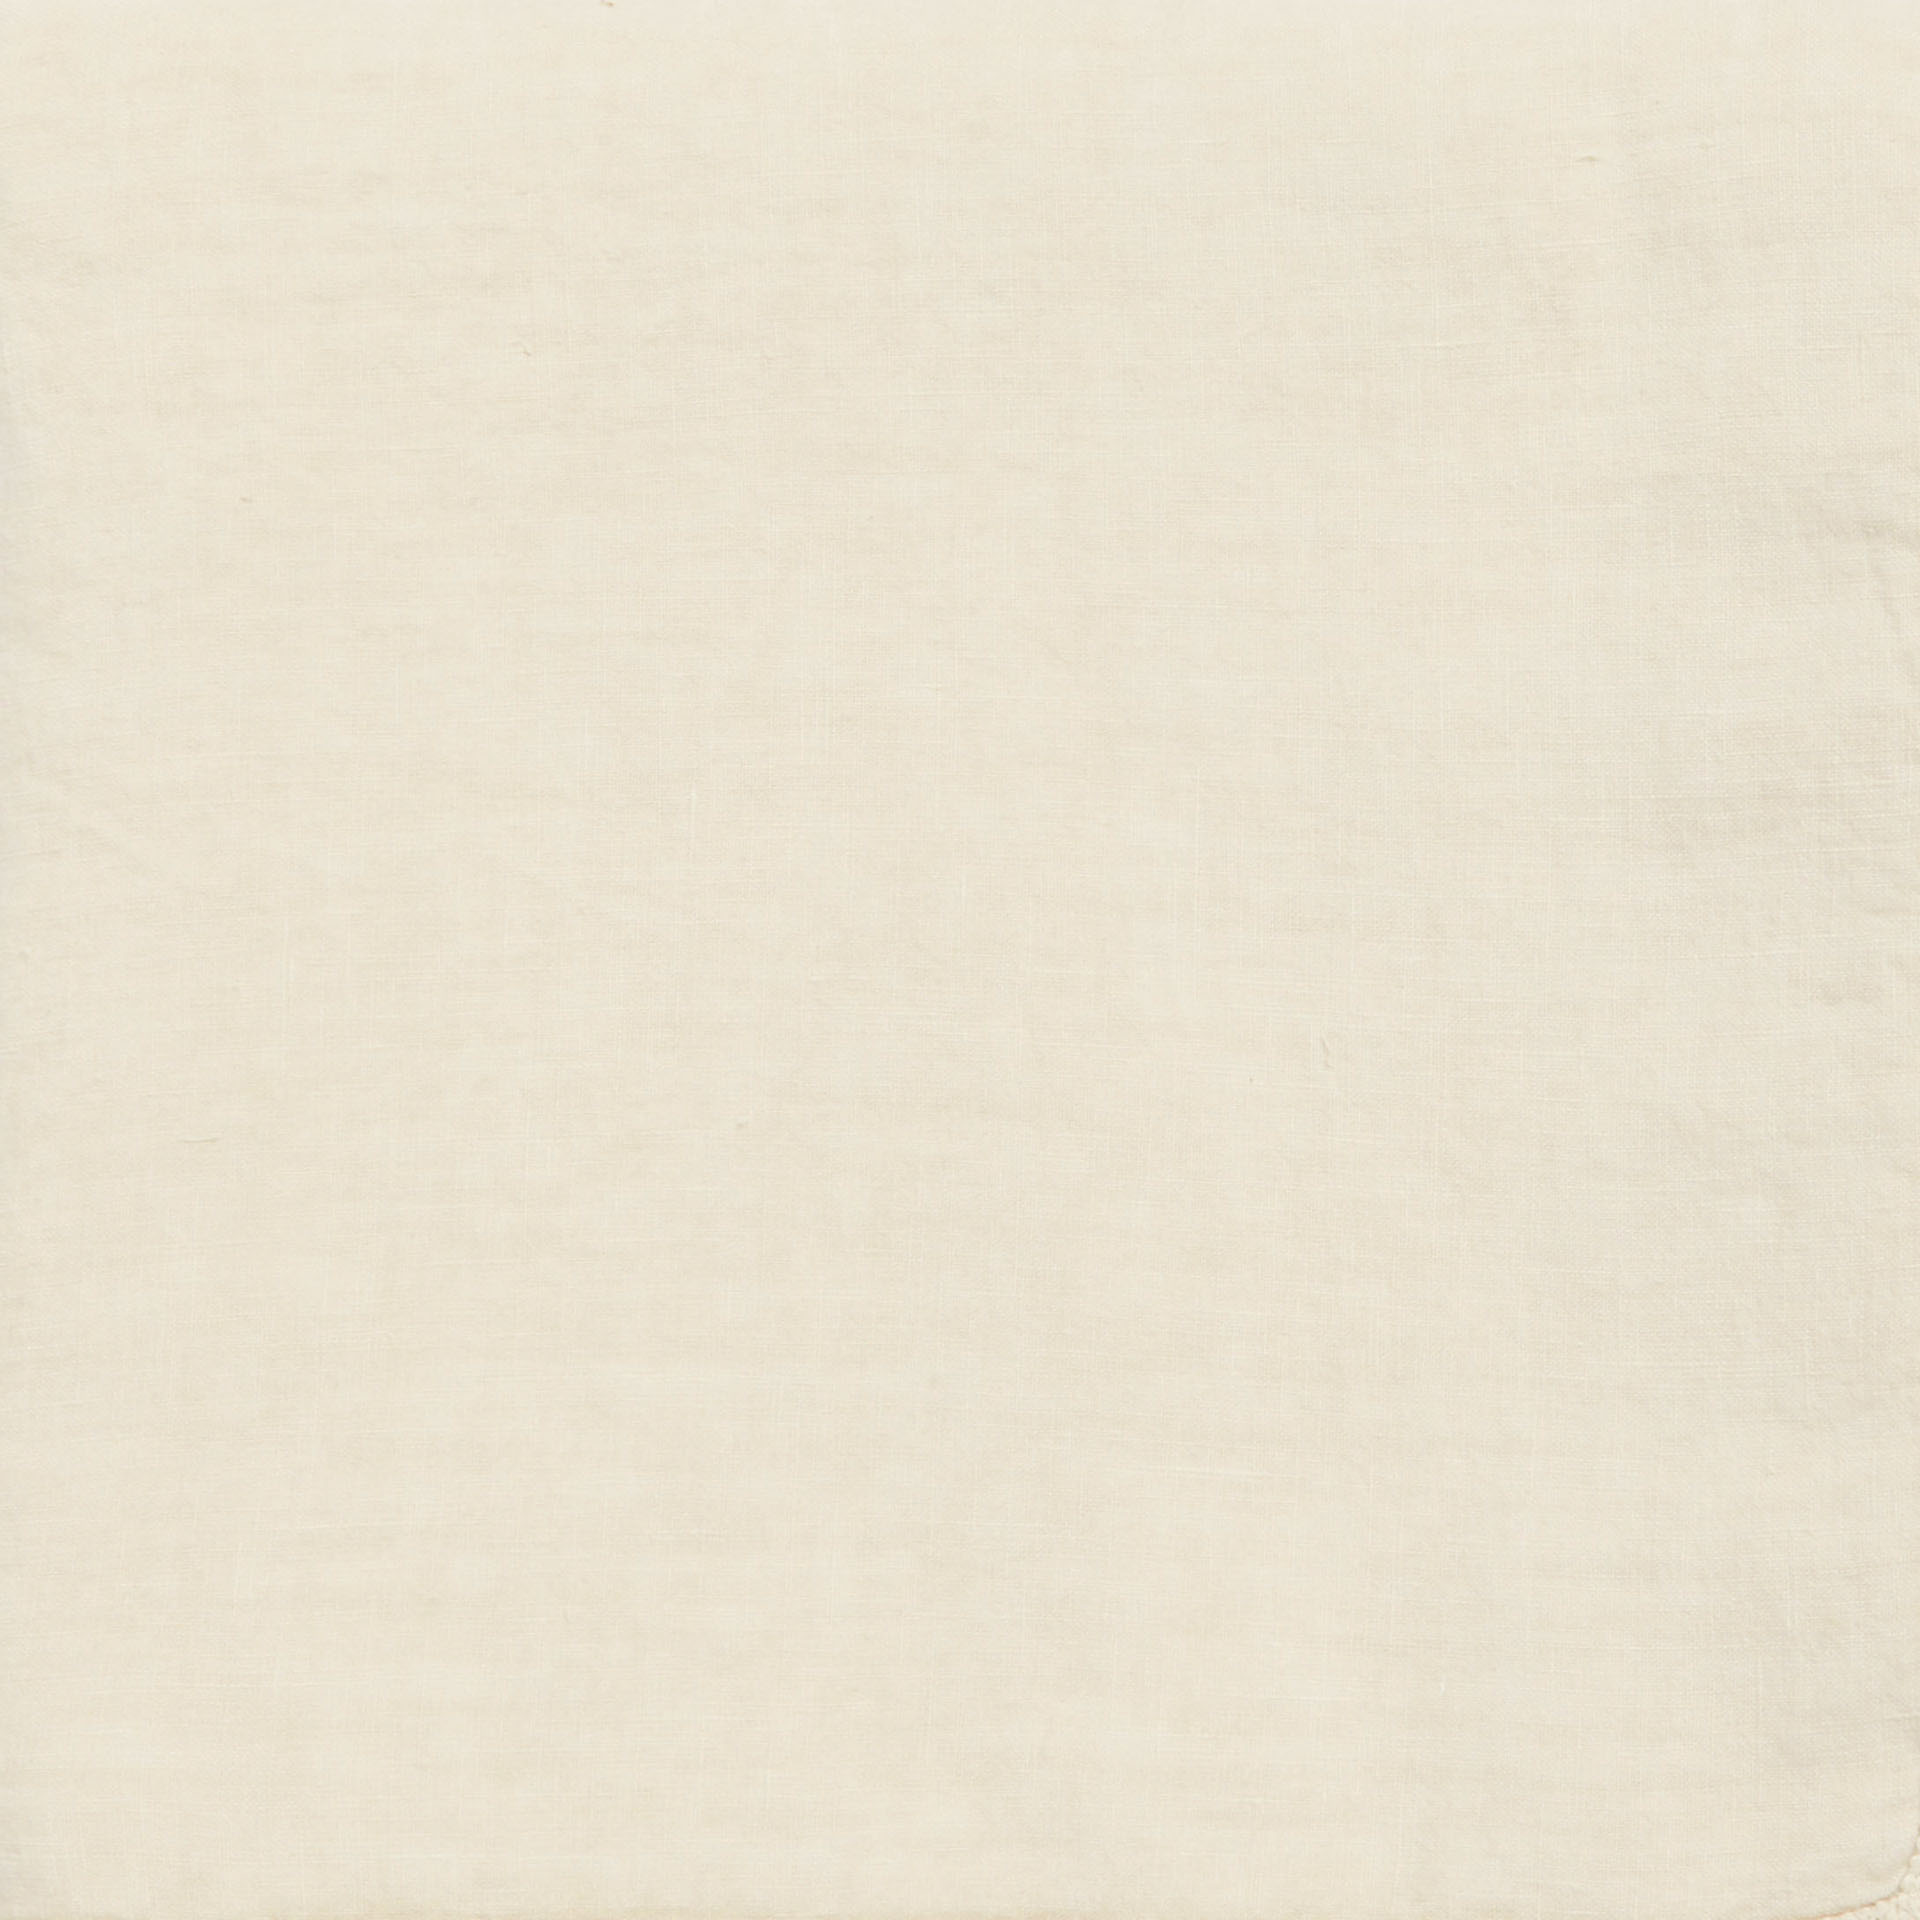 akireh-once-milano-napkins-linen-short-fringes-cream-tablecloths-textile-4